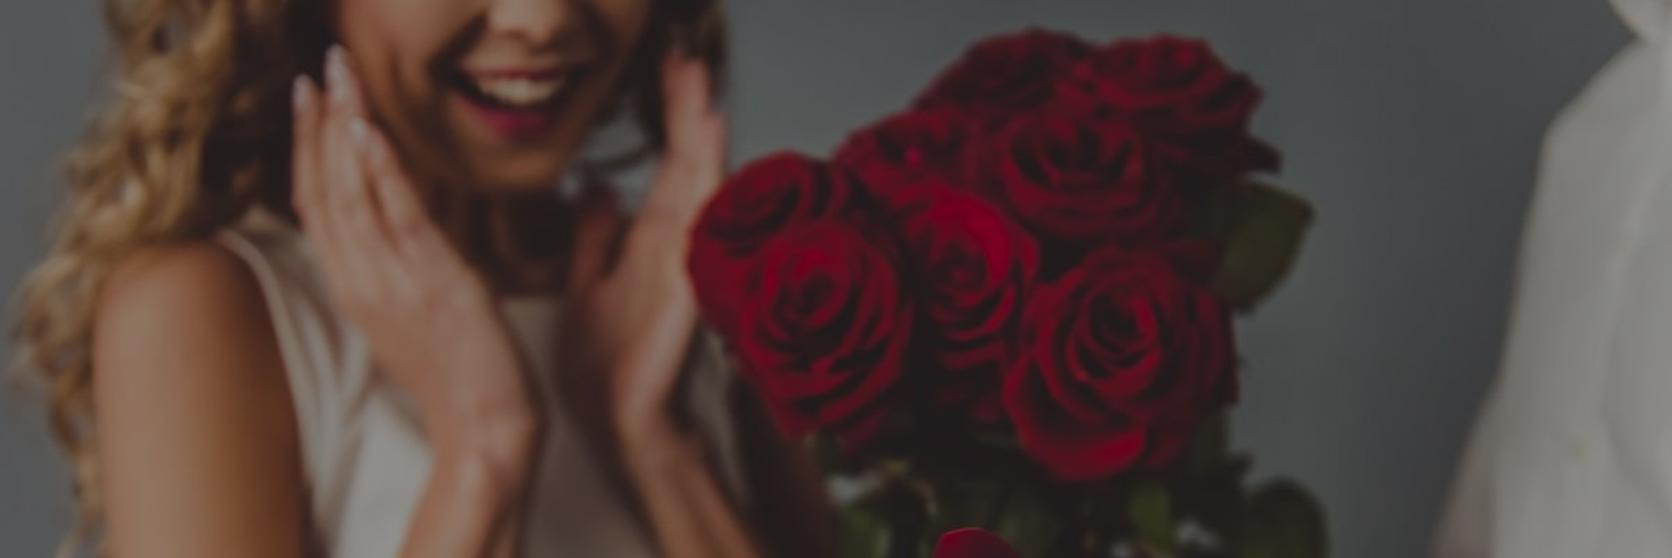 man-proposing-to-woman-red-roses-ring